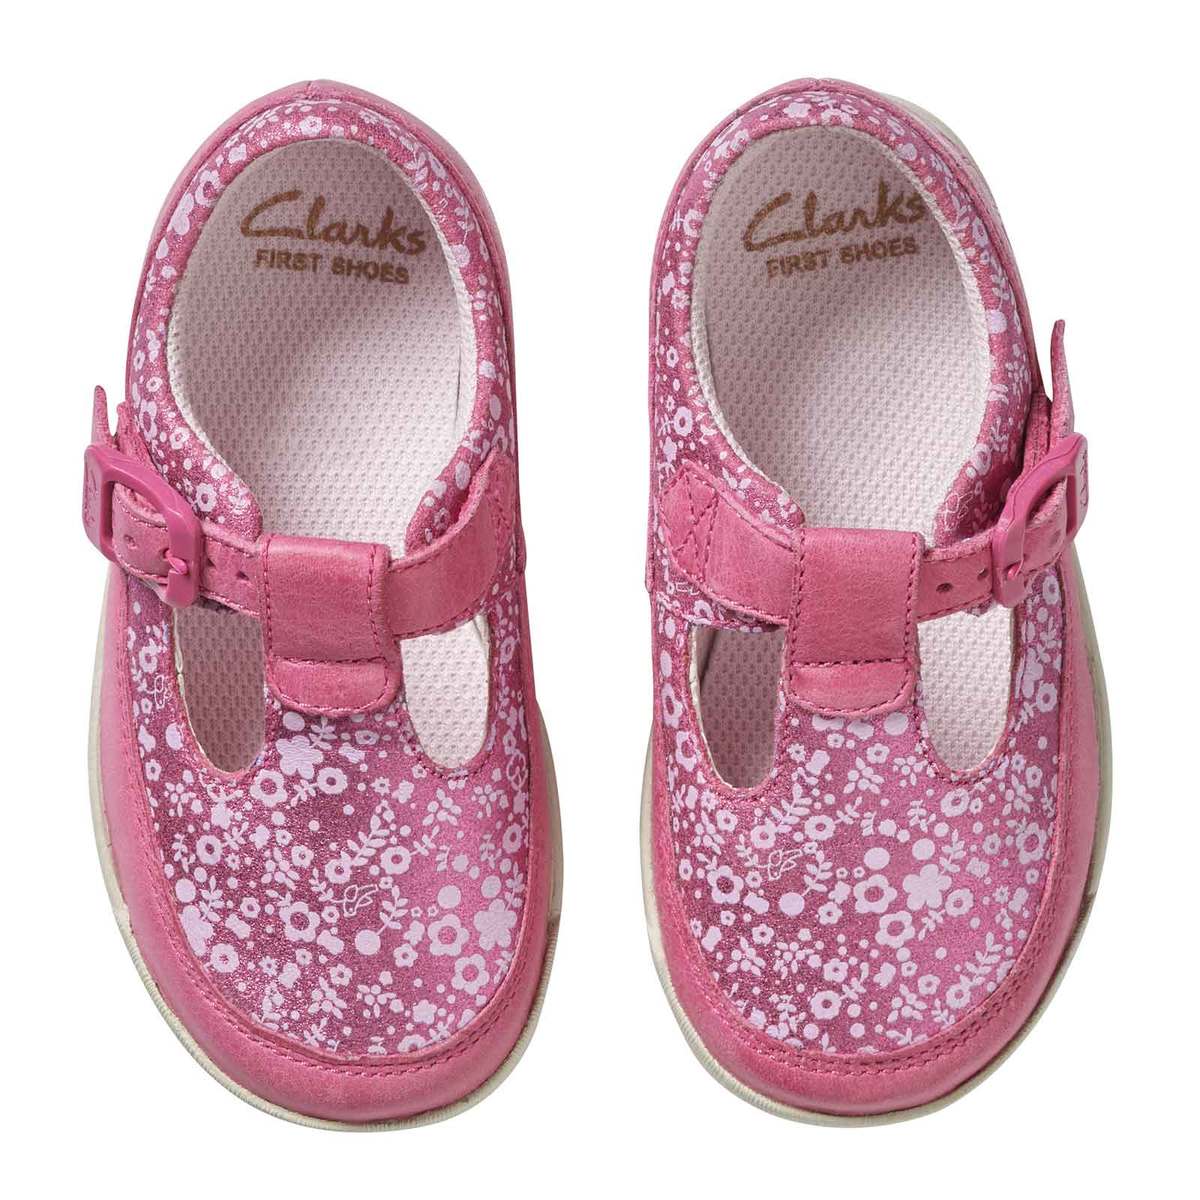 clarks shoes kids girls